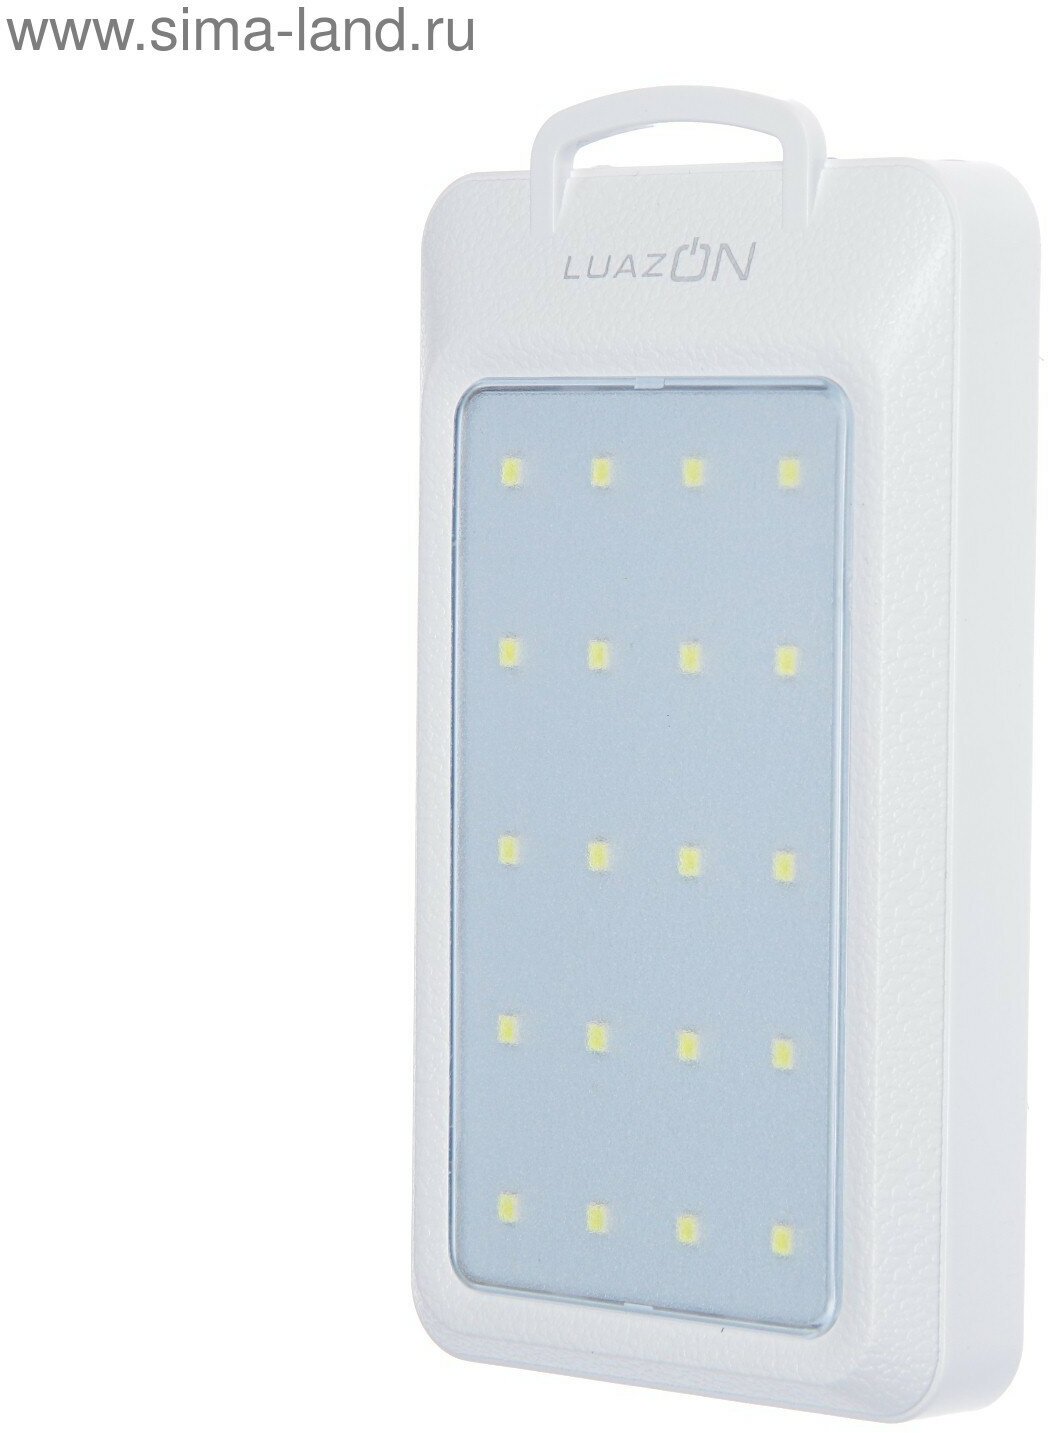 Внешний аккумулятор LuazON PB-09, 7000 мАч, 2хUSB, microUSB, 1 A, солнеч бат, фонарик, компас